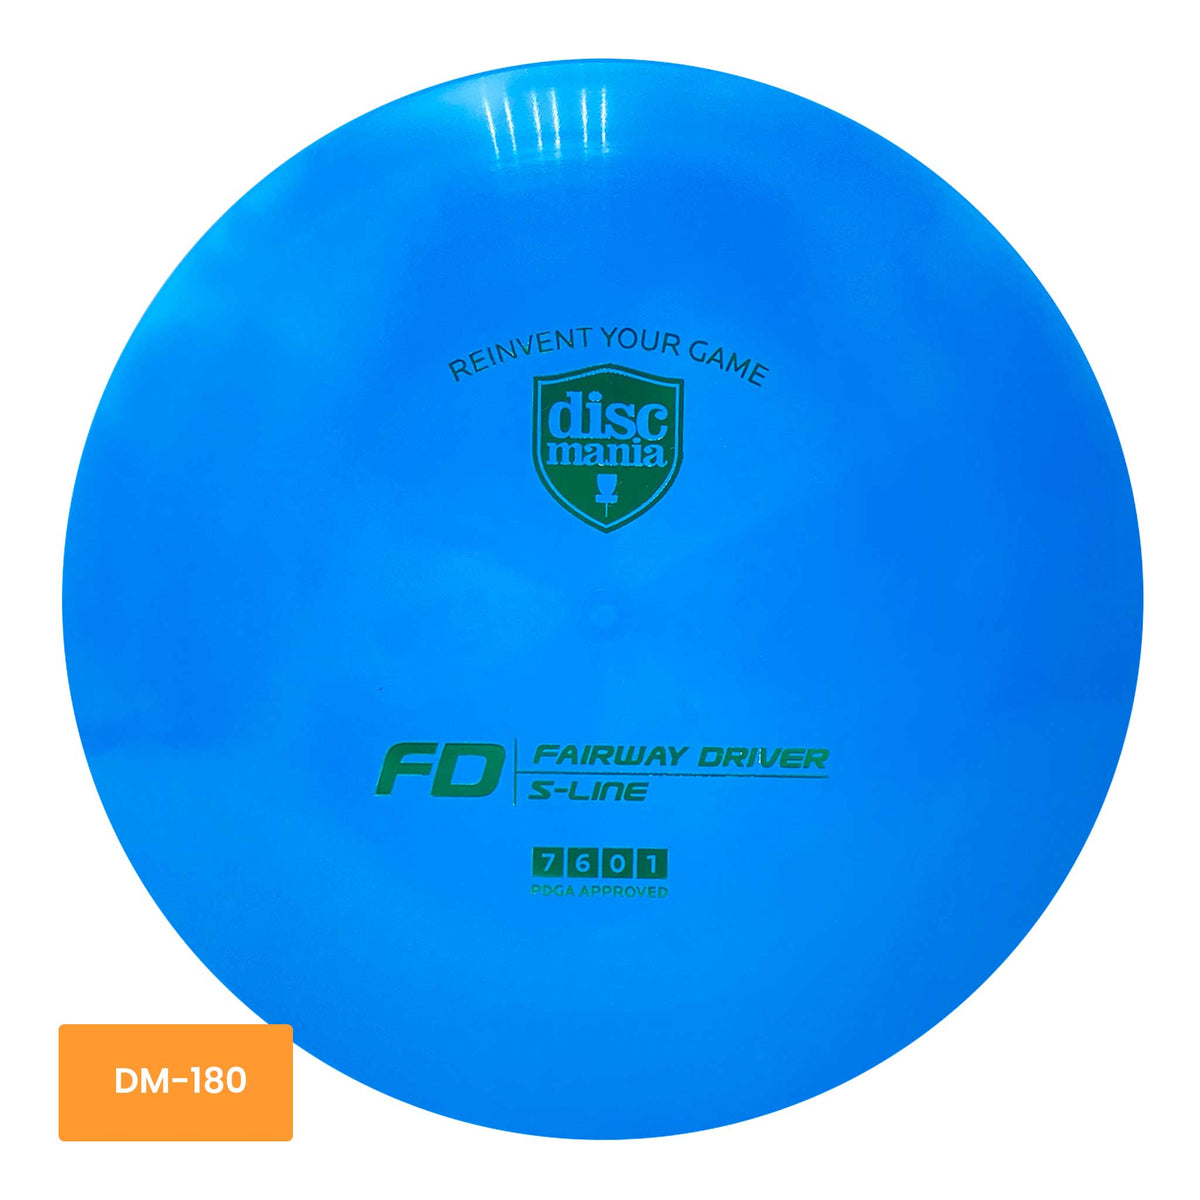 Discmania S-Line FD fairway driver - Blue